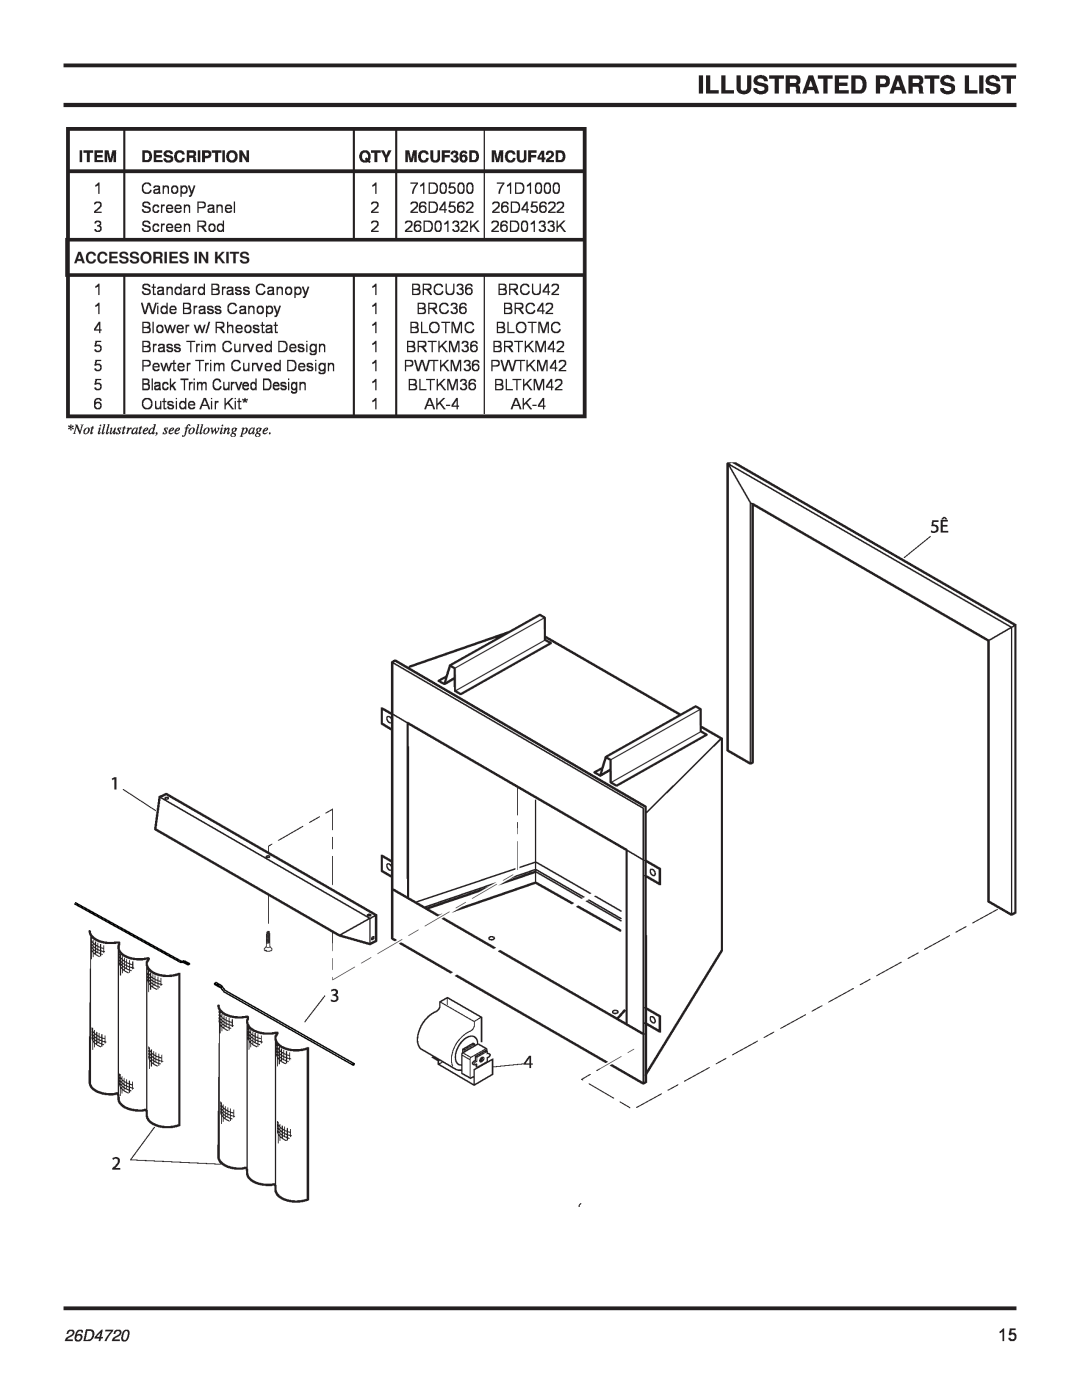 Monessen Hearth MCUF42D SERIES dimensions Illustrated Parts List, 5Ê, Description, MCUF36D, Accessories In Kits, 26D4720 